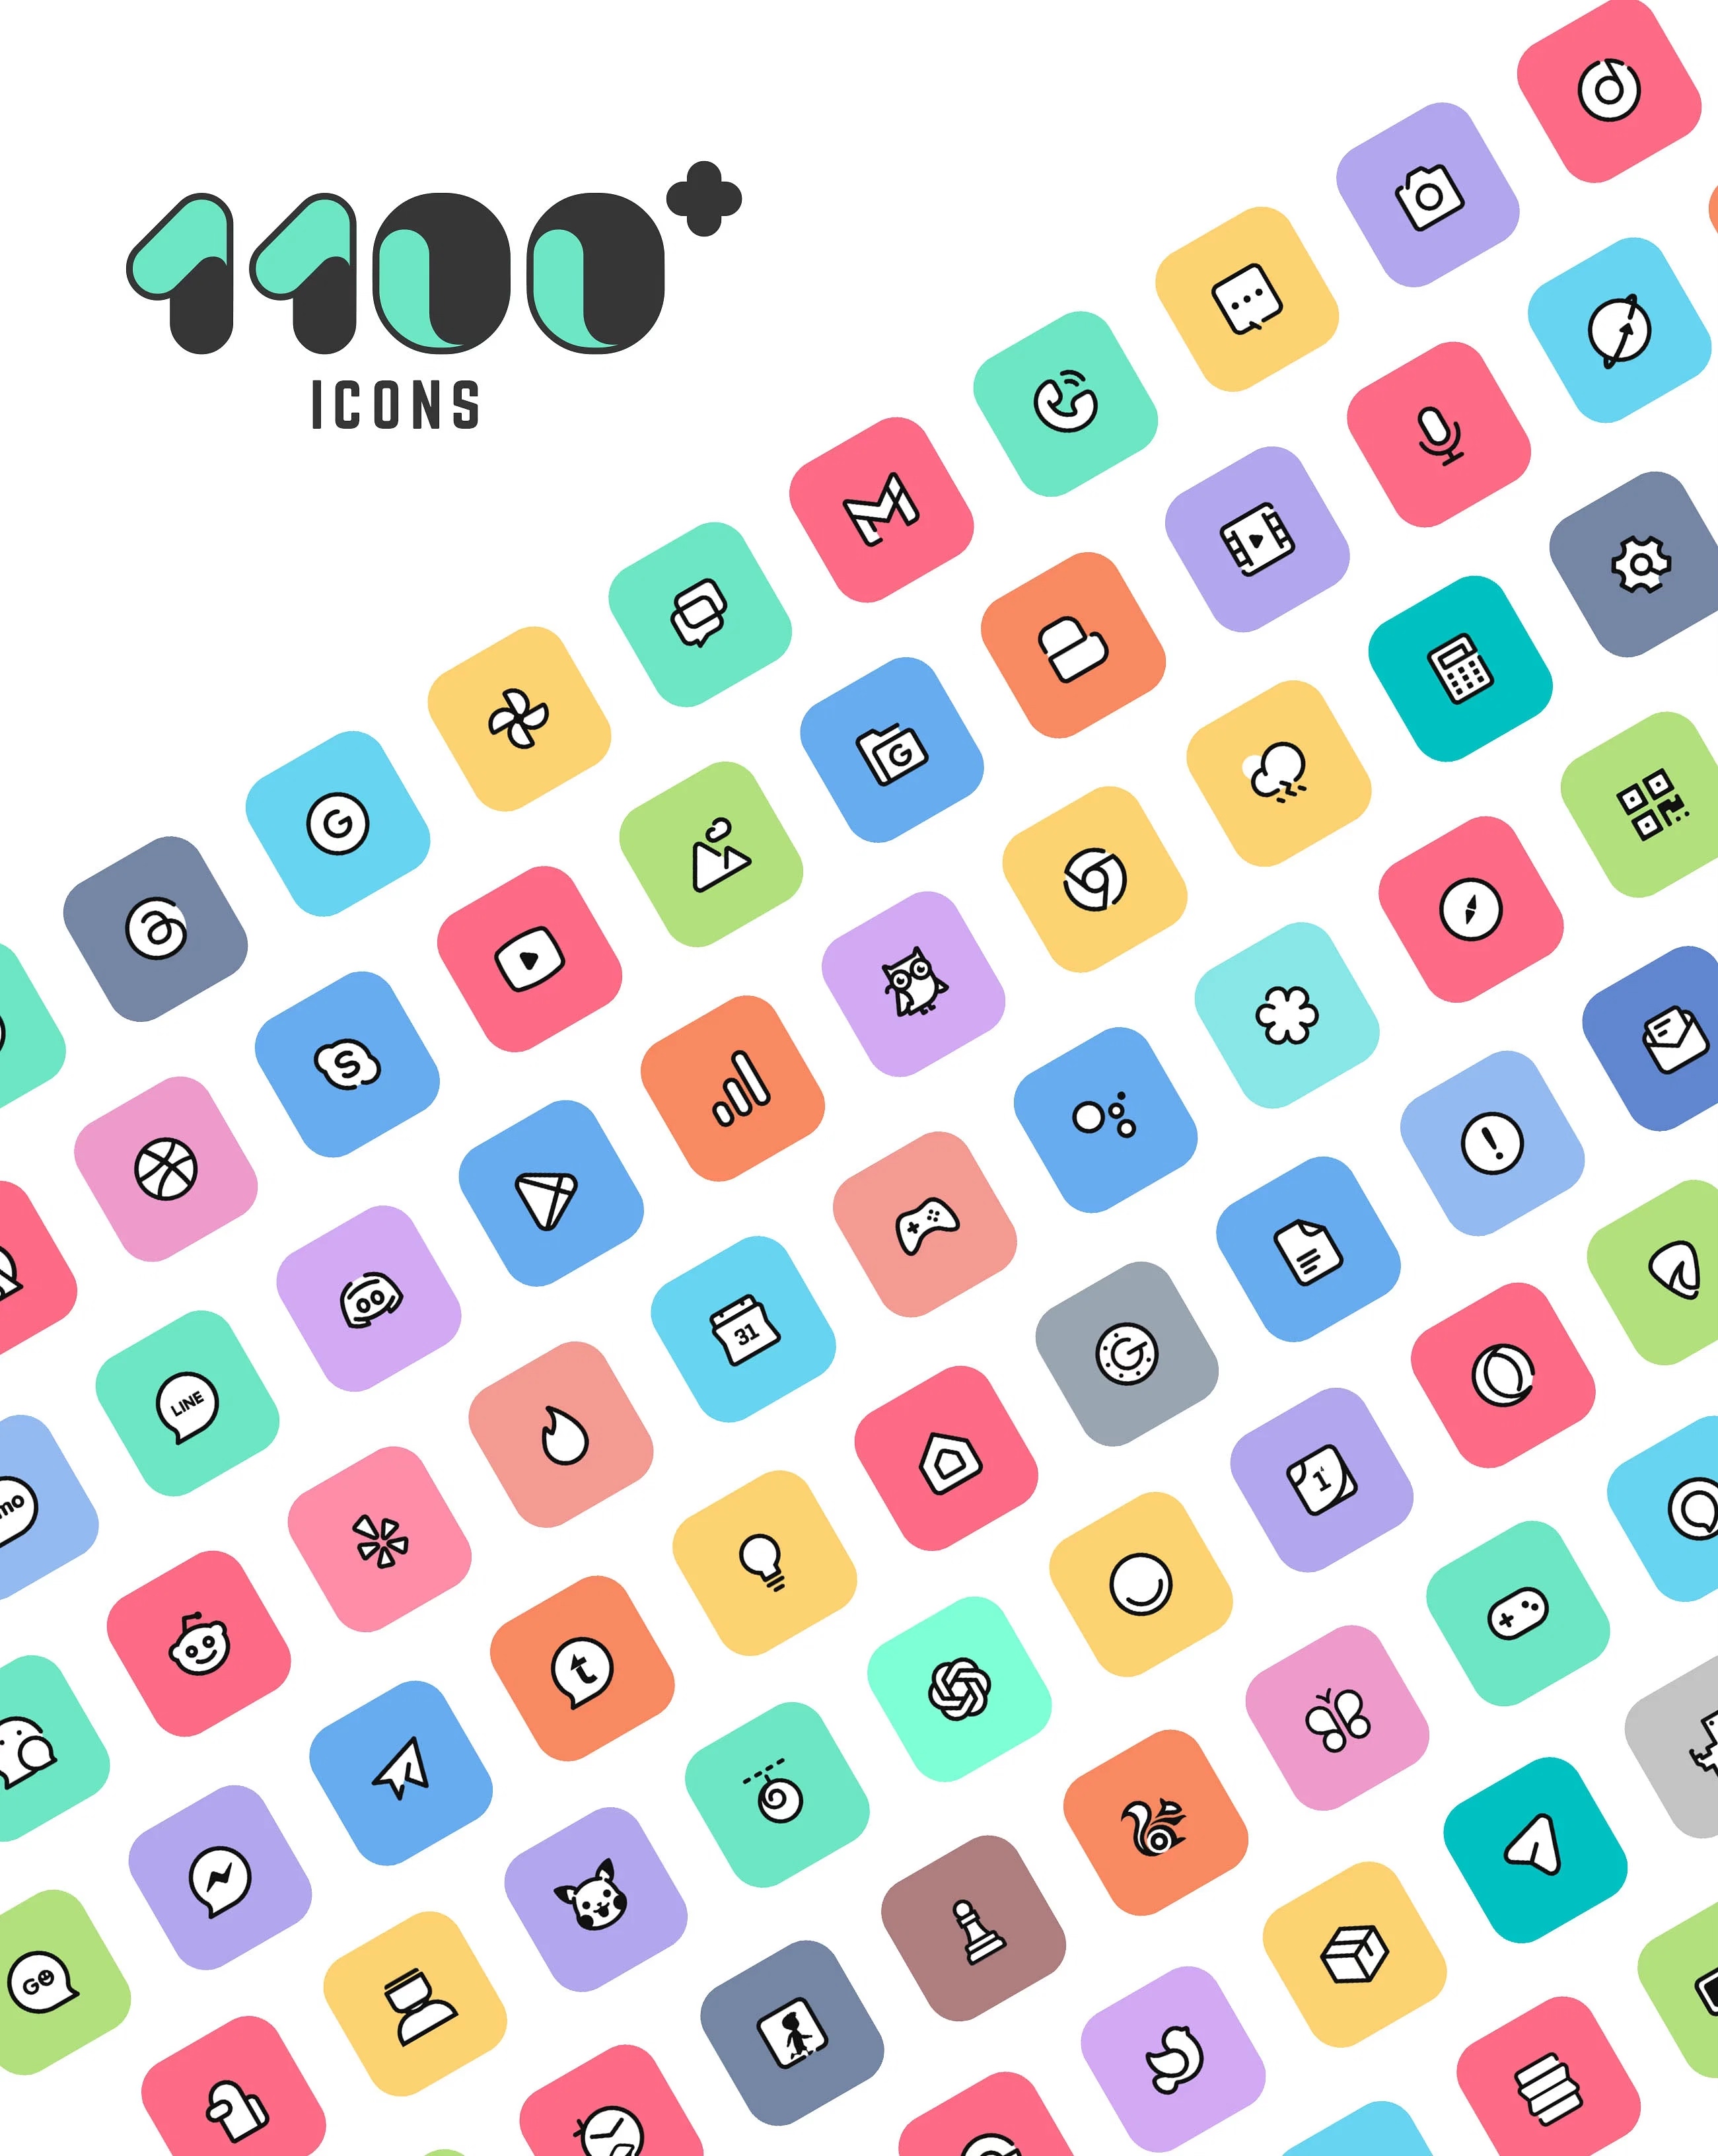 Crayon Adaptive Icons more than 1,100 app icons.